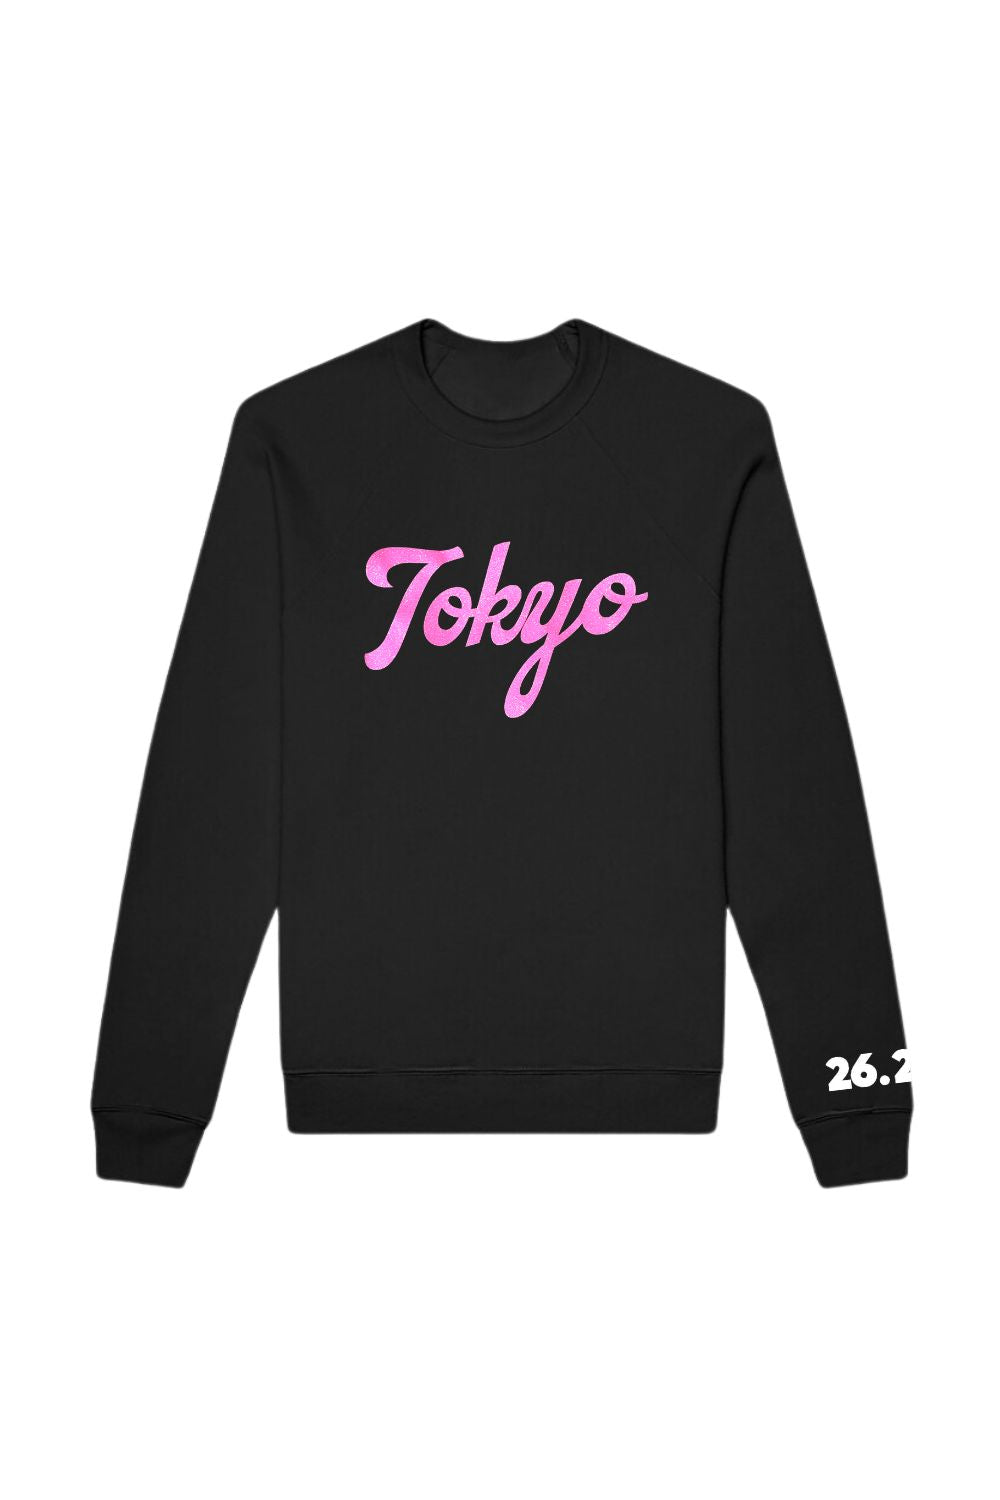 Tokyo Sweatshirt